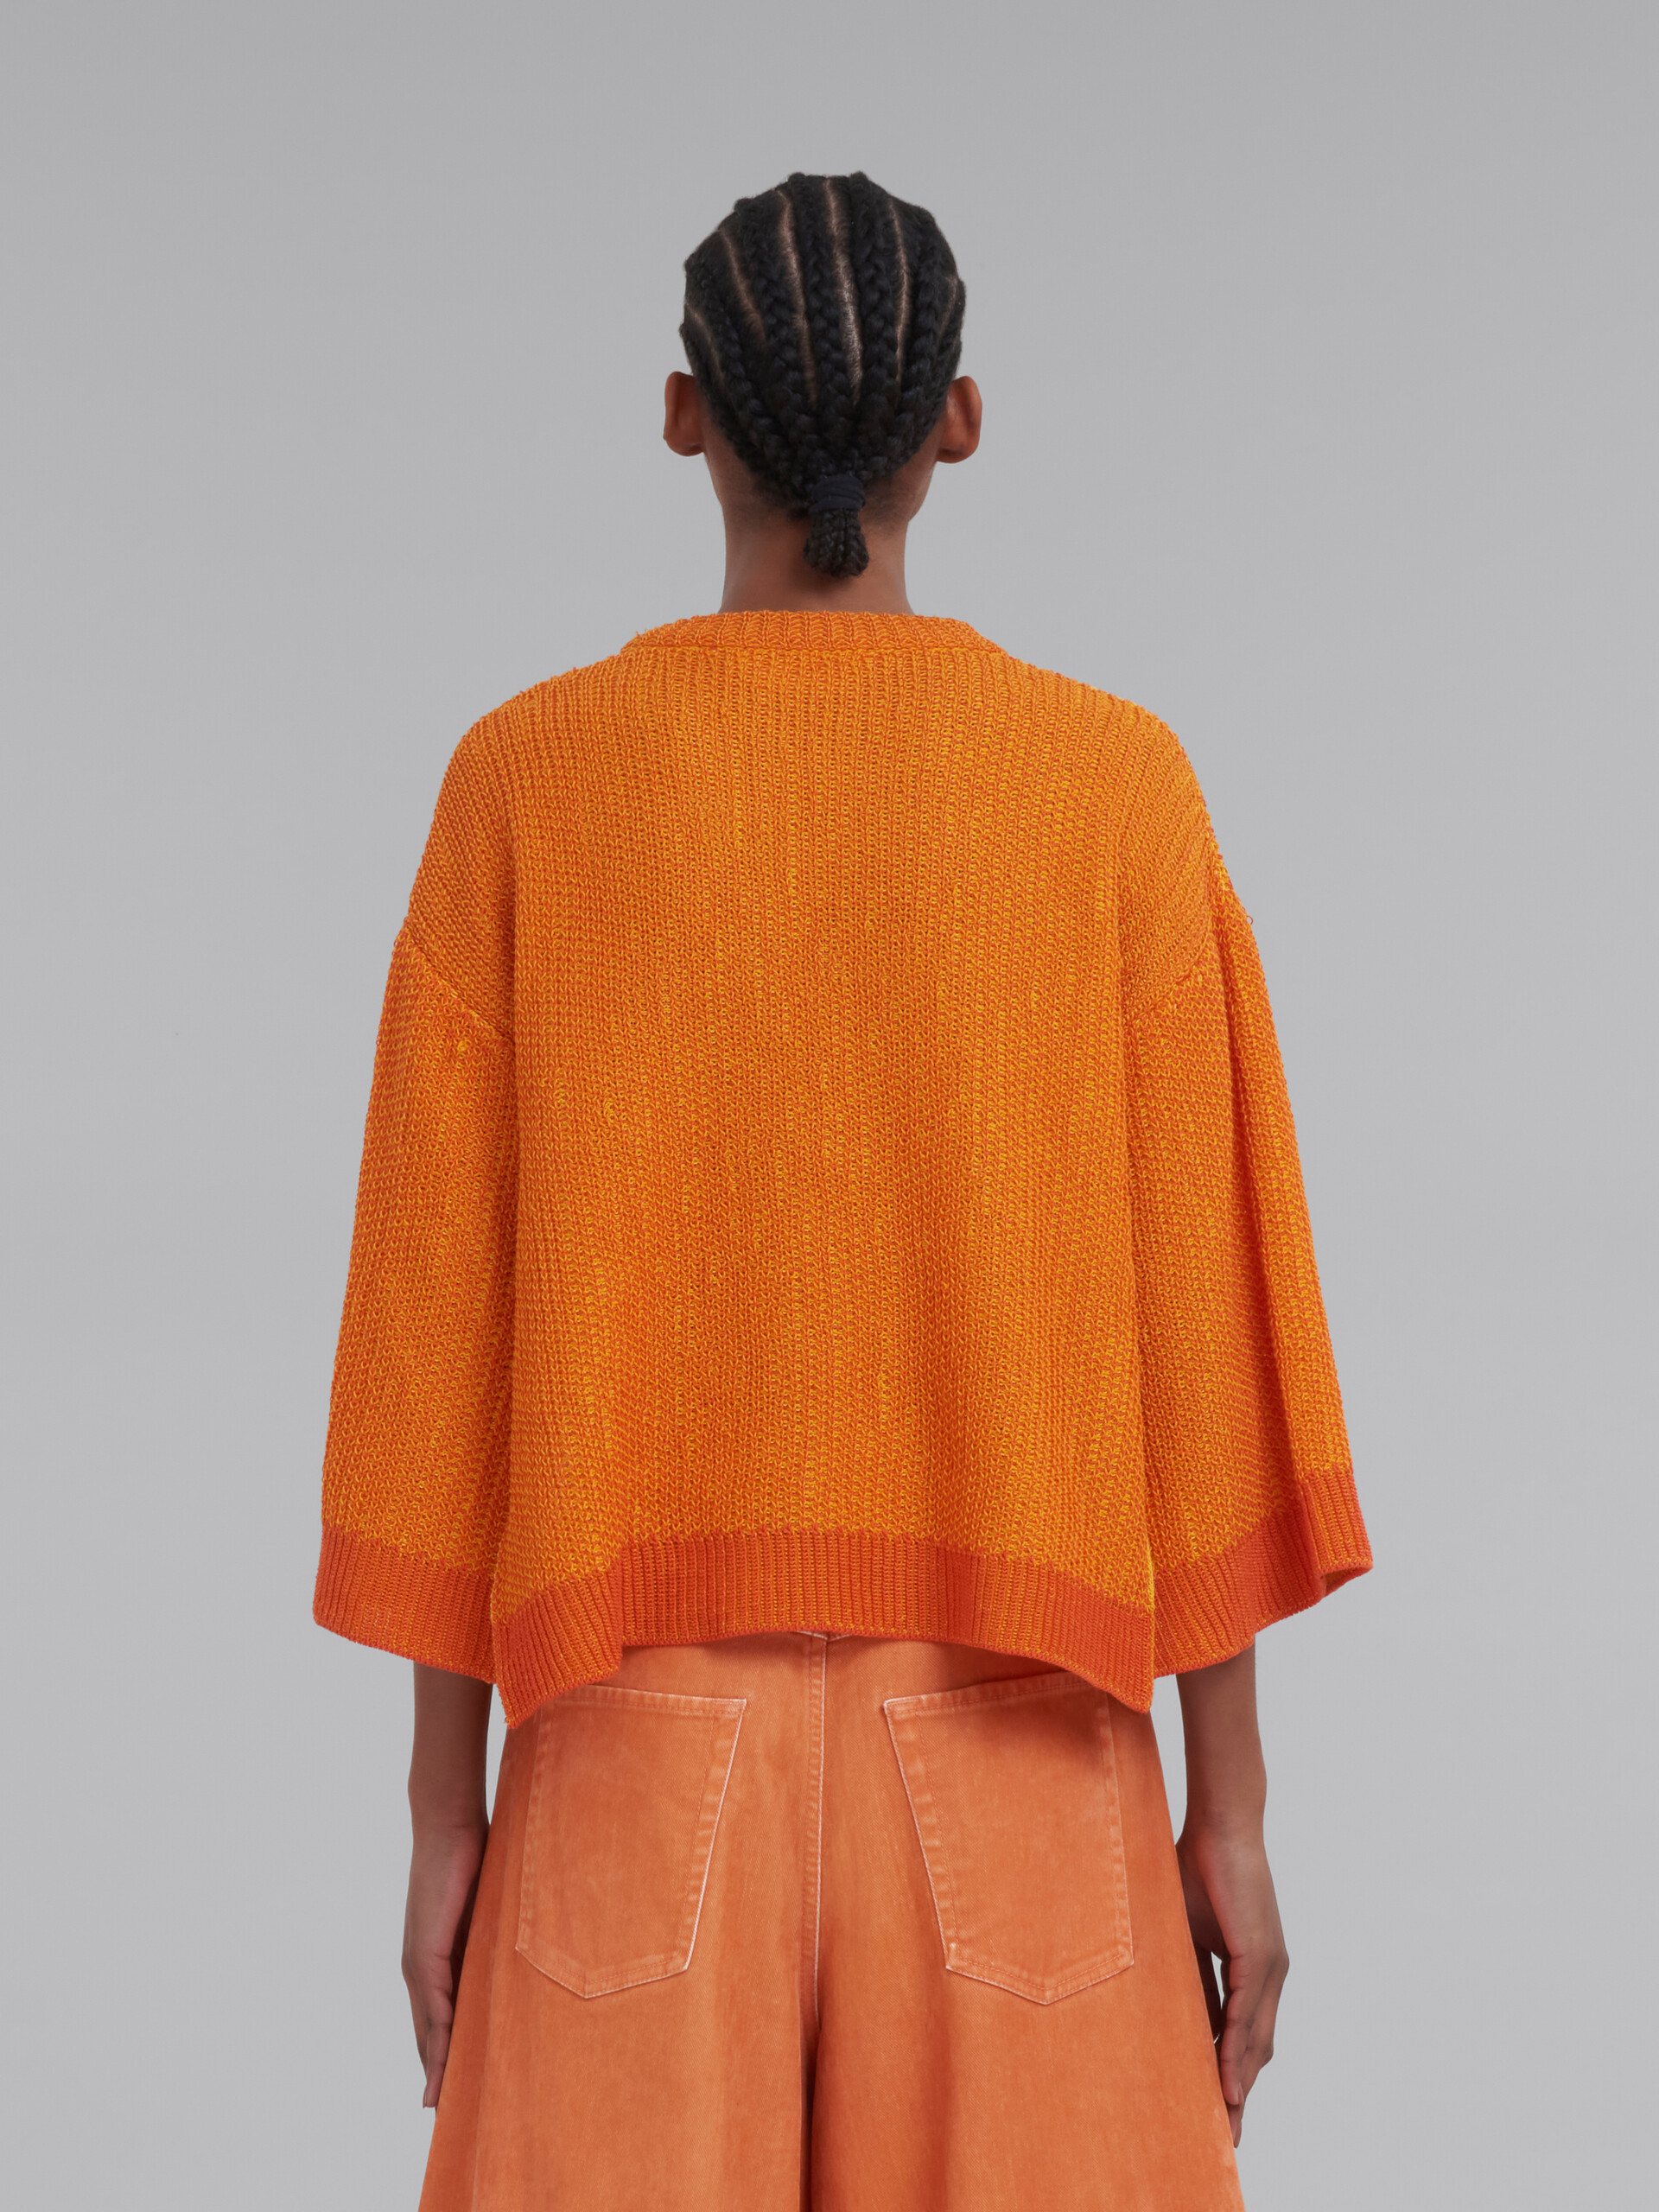 Orange jumper with kimono sleeves - Pullovers - Image 3